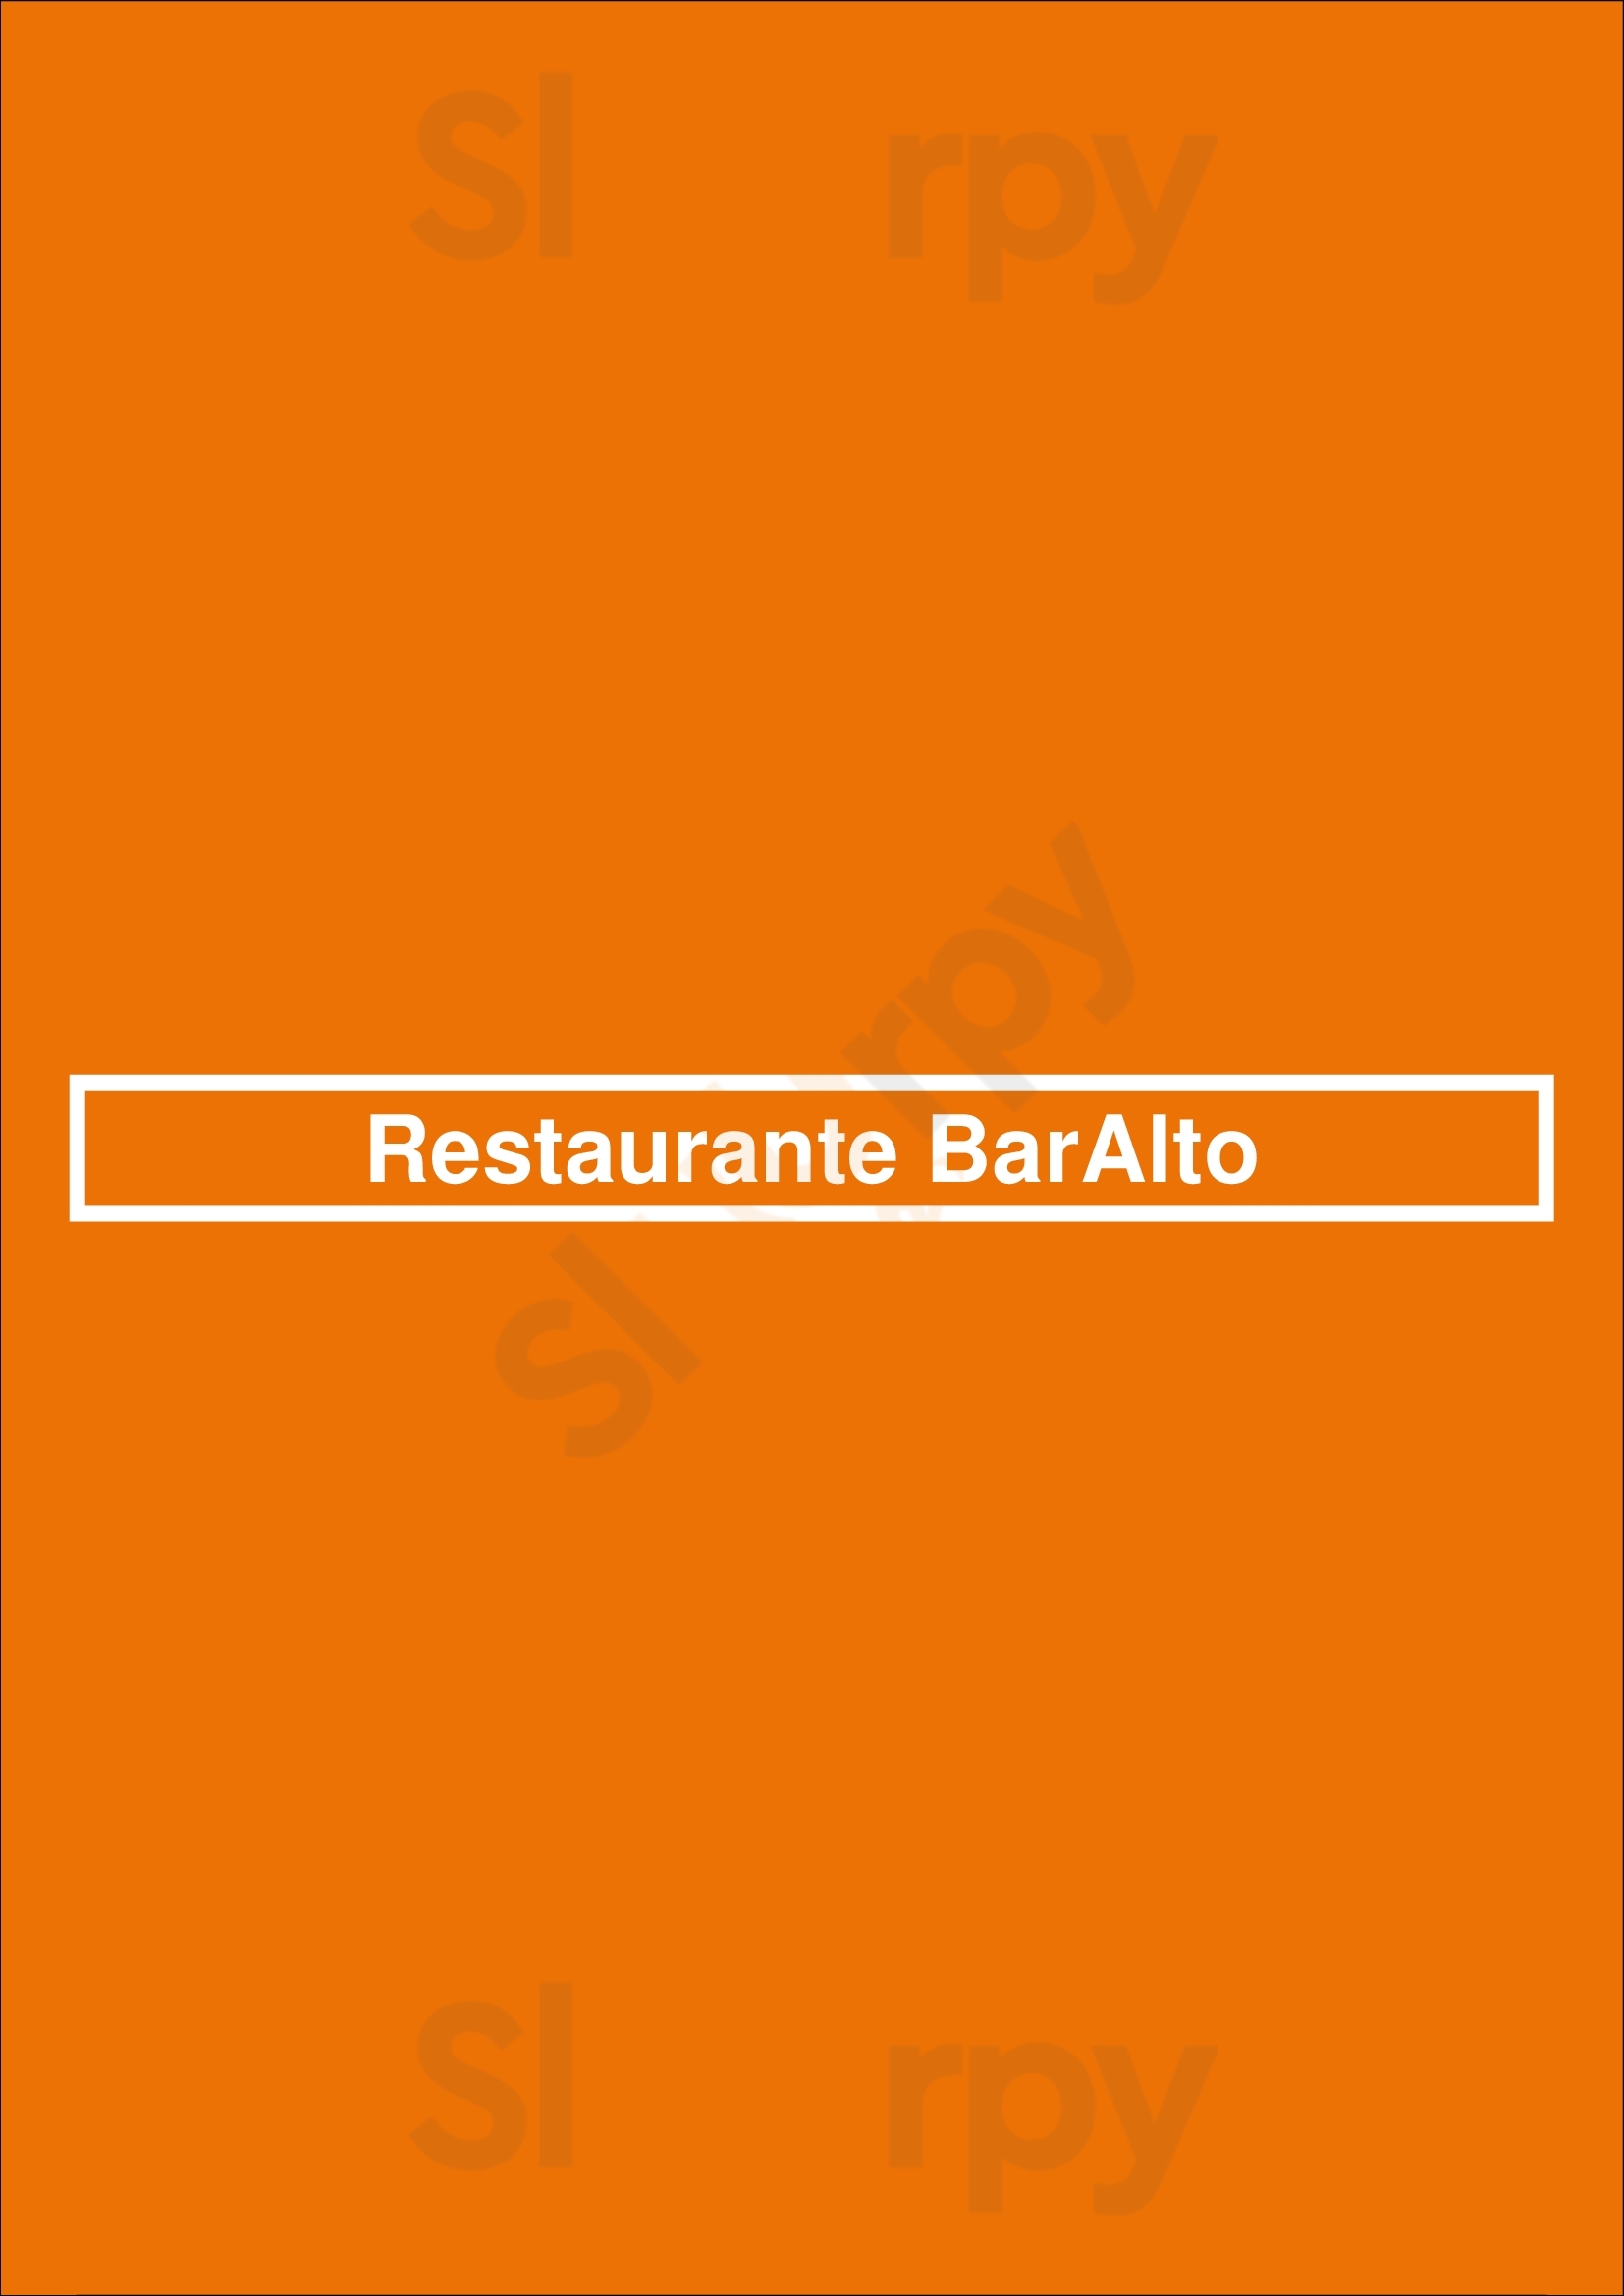 Restaurante Baralto Lisboa Menu - 1